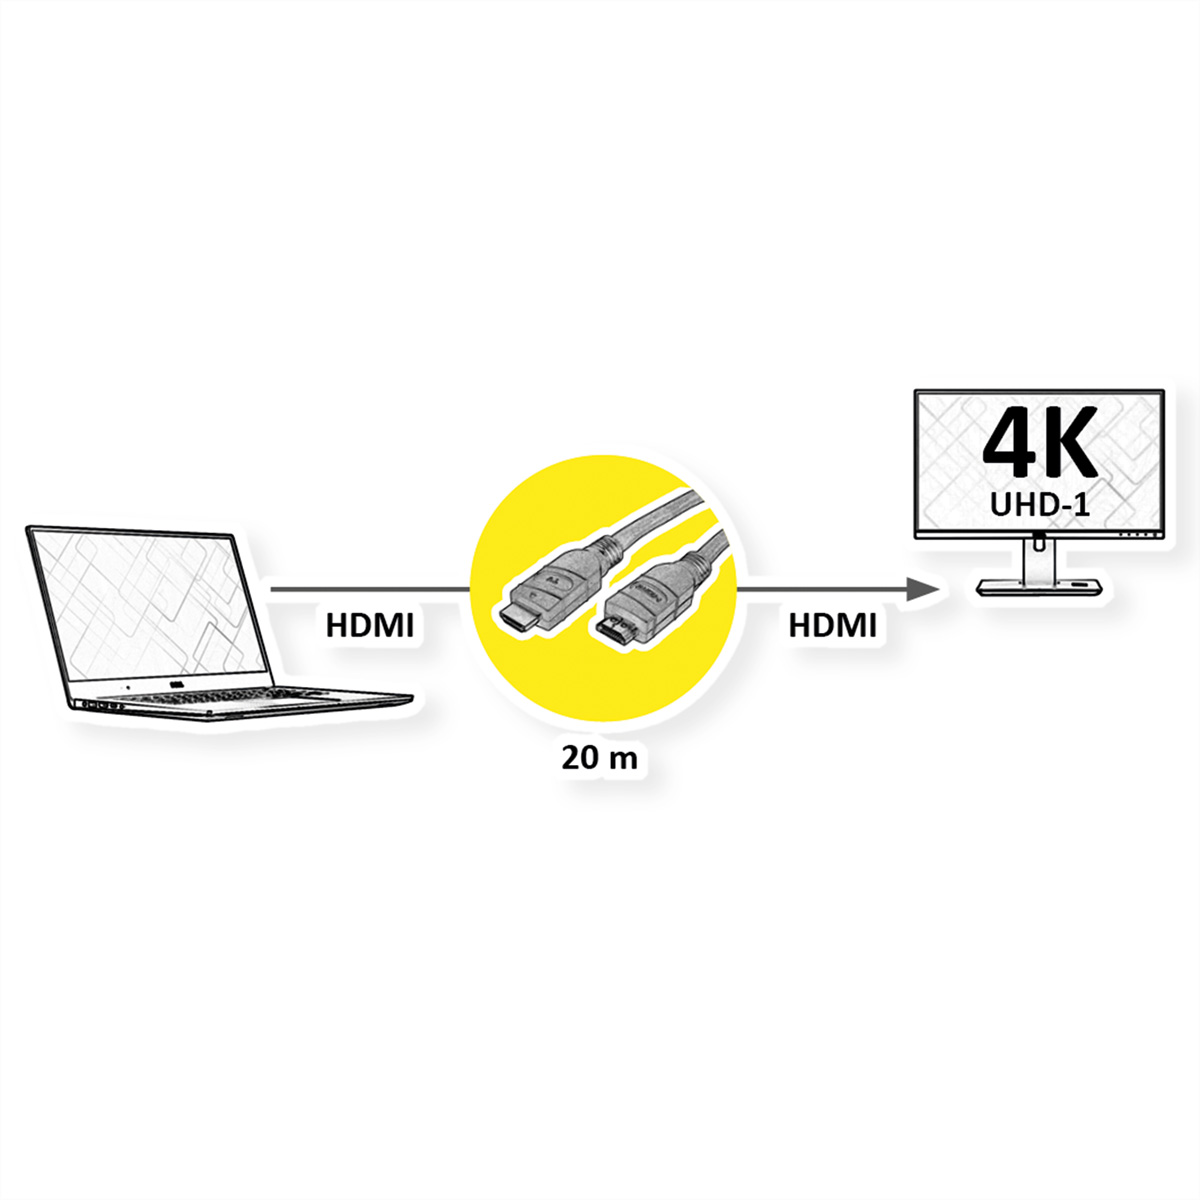 HD Kabel Repeater Ethernet HDMI mit mit Ultra VALUE UHD Kabel 4K HDMI